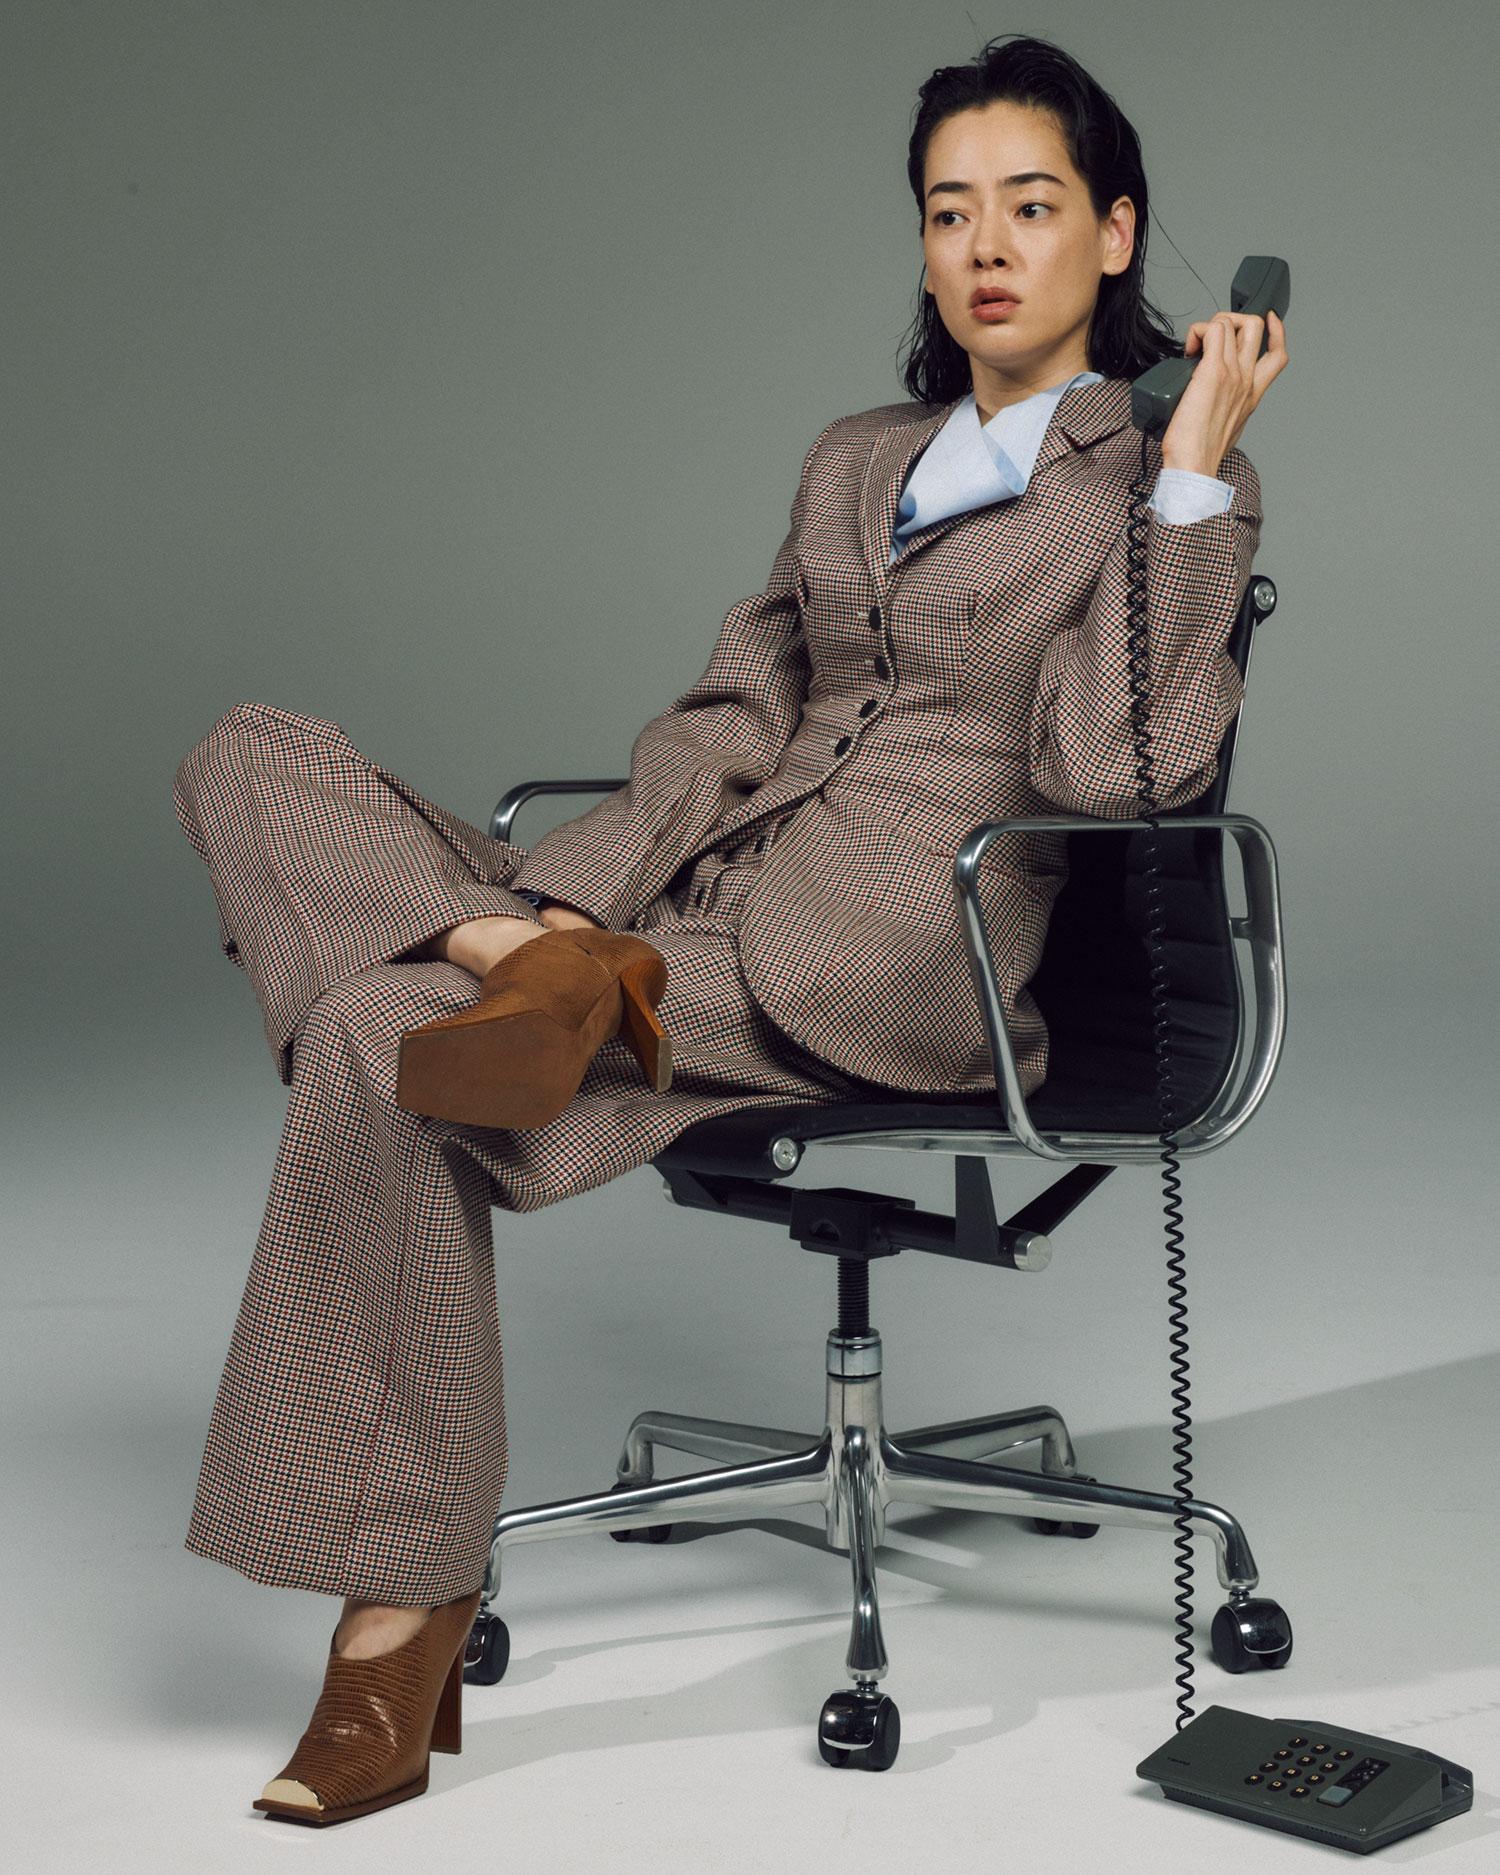 Mikako Ichikawa in Stella McCartney Suit by Mitsuo Okamoto for The Fashion Post Japan 